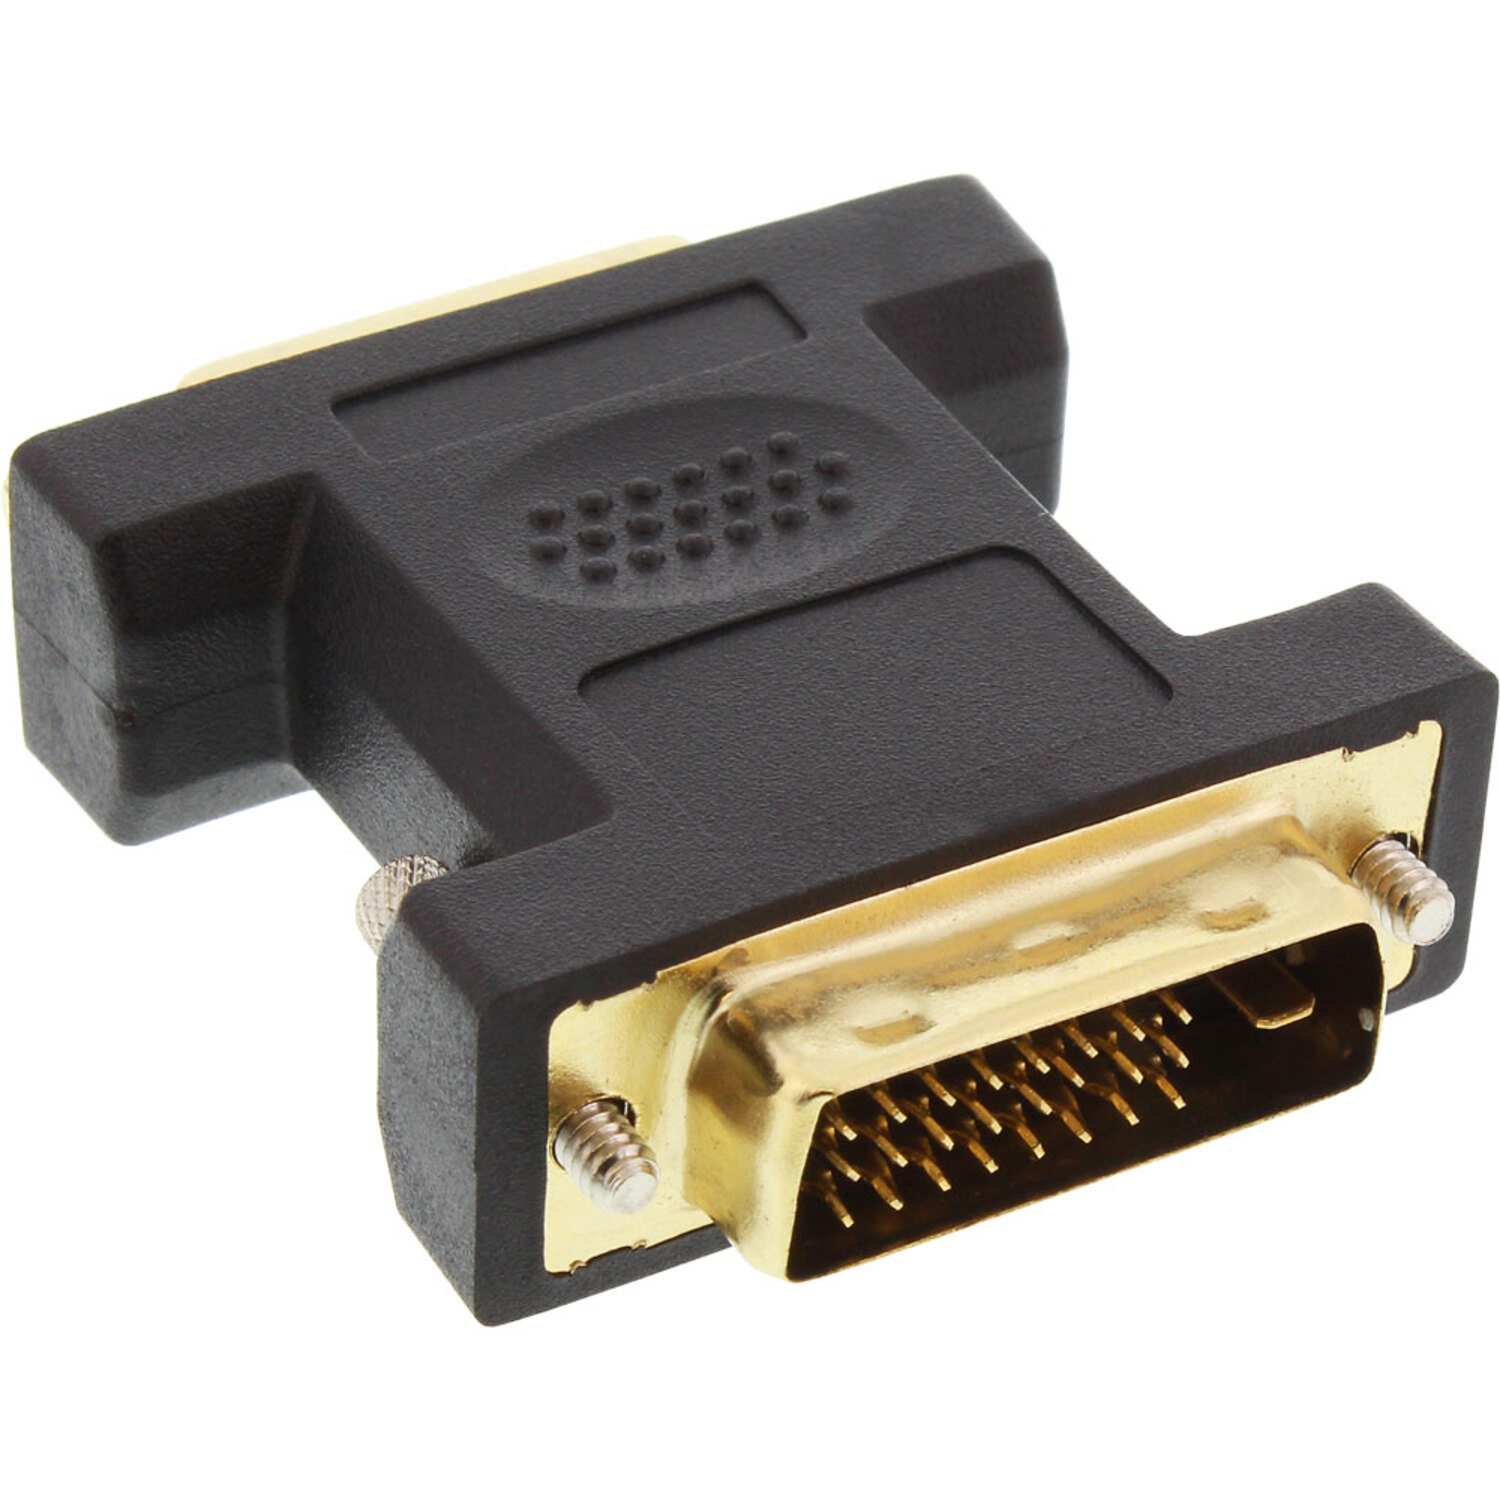 InLine® DFP an DVI-D DVI Digital verg. / zu VGA / / 24+1 24+5 Stecker, Buchse / DVI Adapter, INLINE